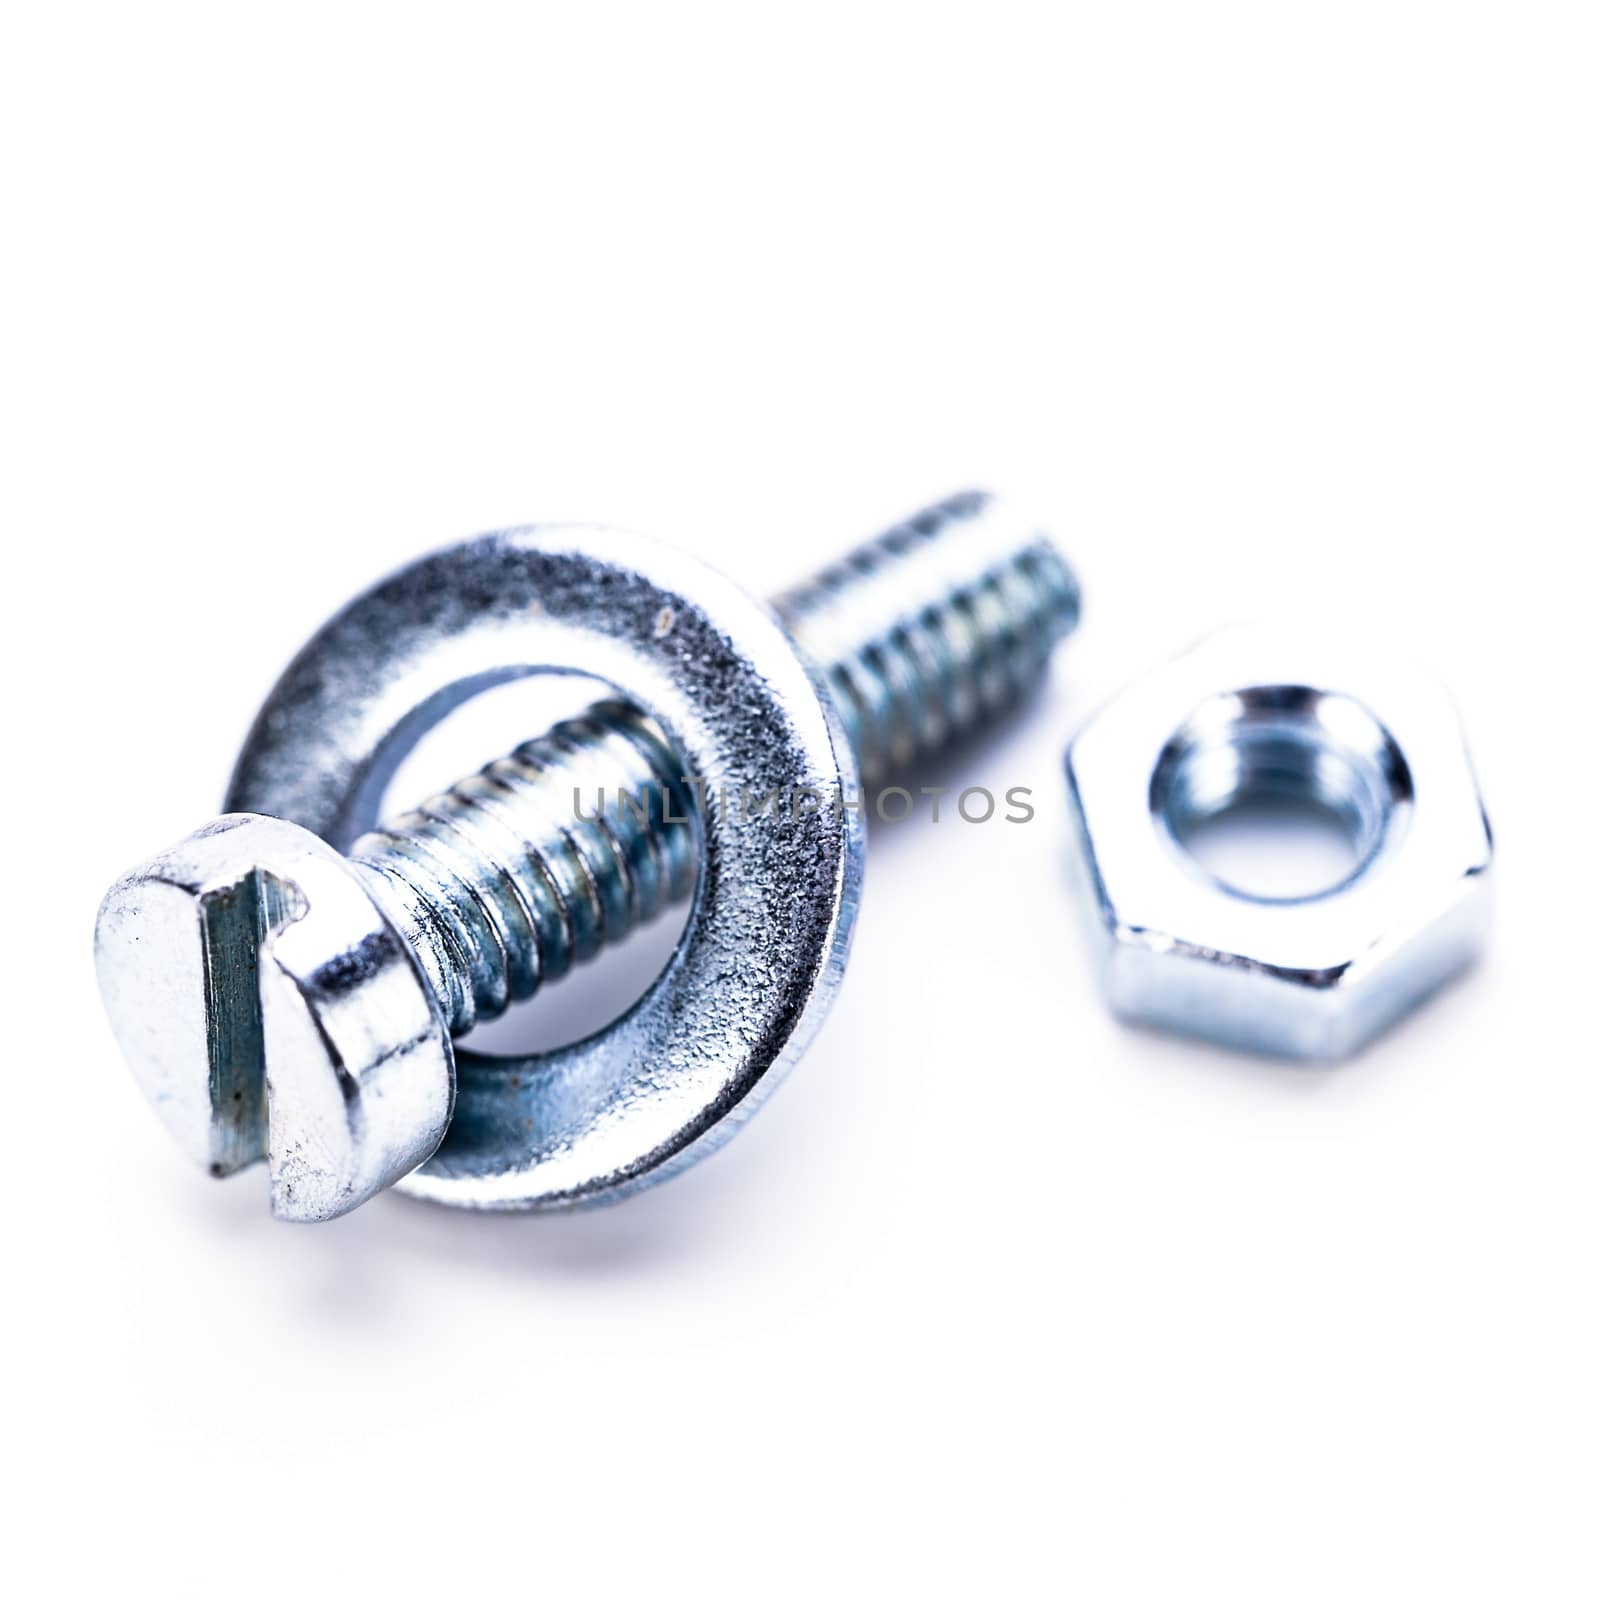 silver steel hexagonal screw tool objects macro metal industry